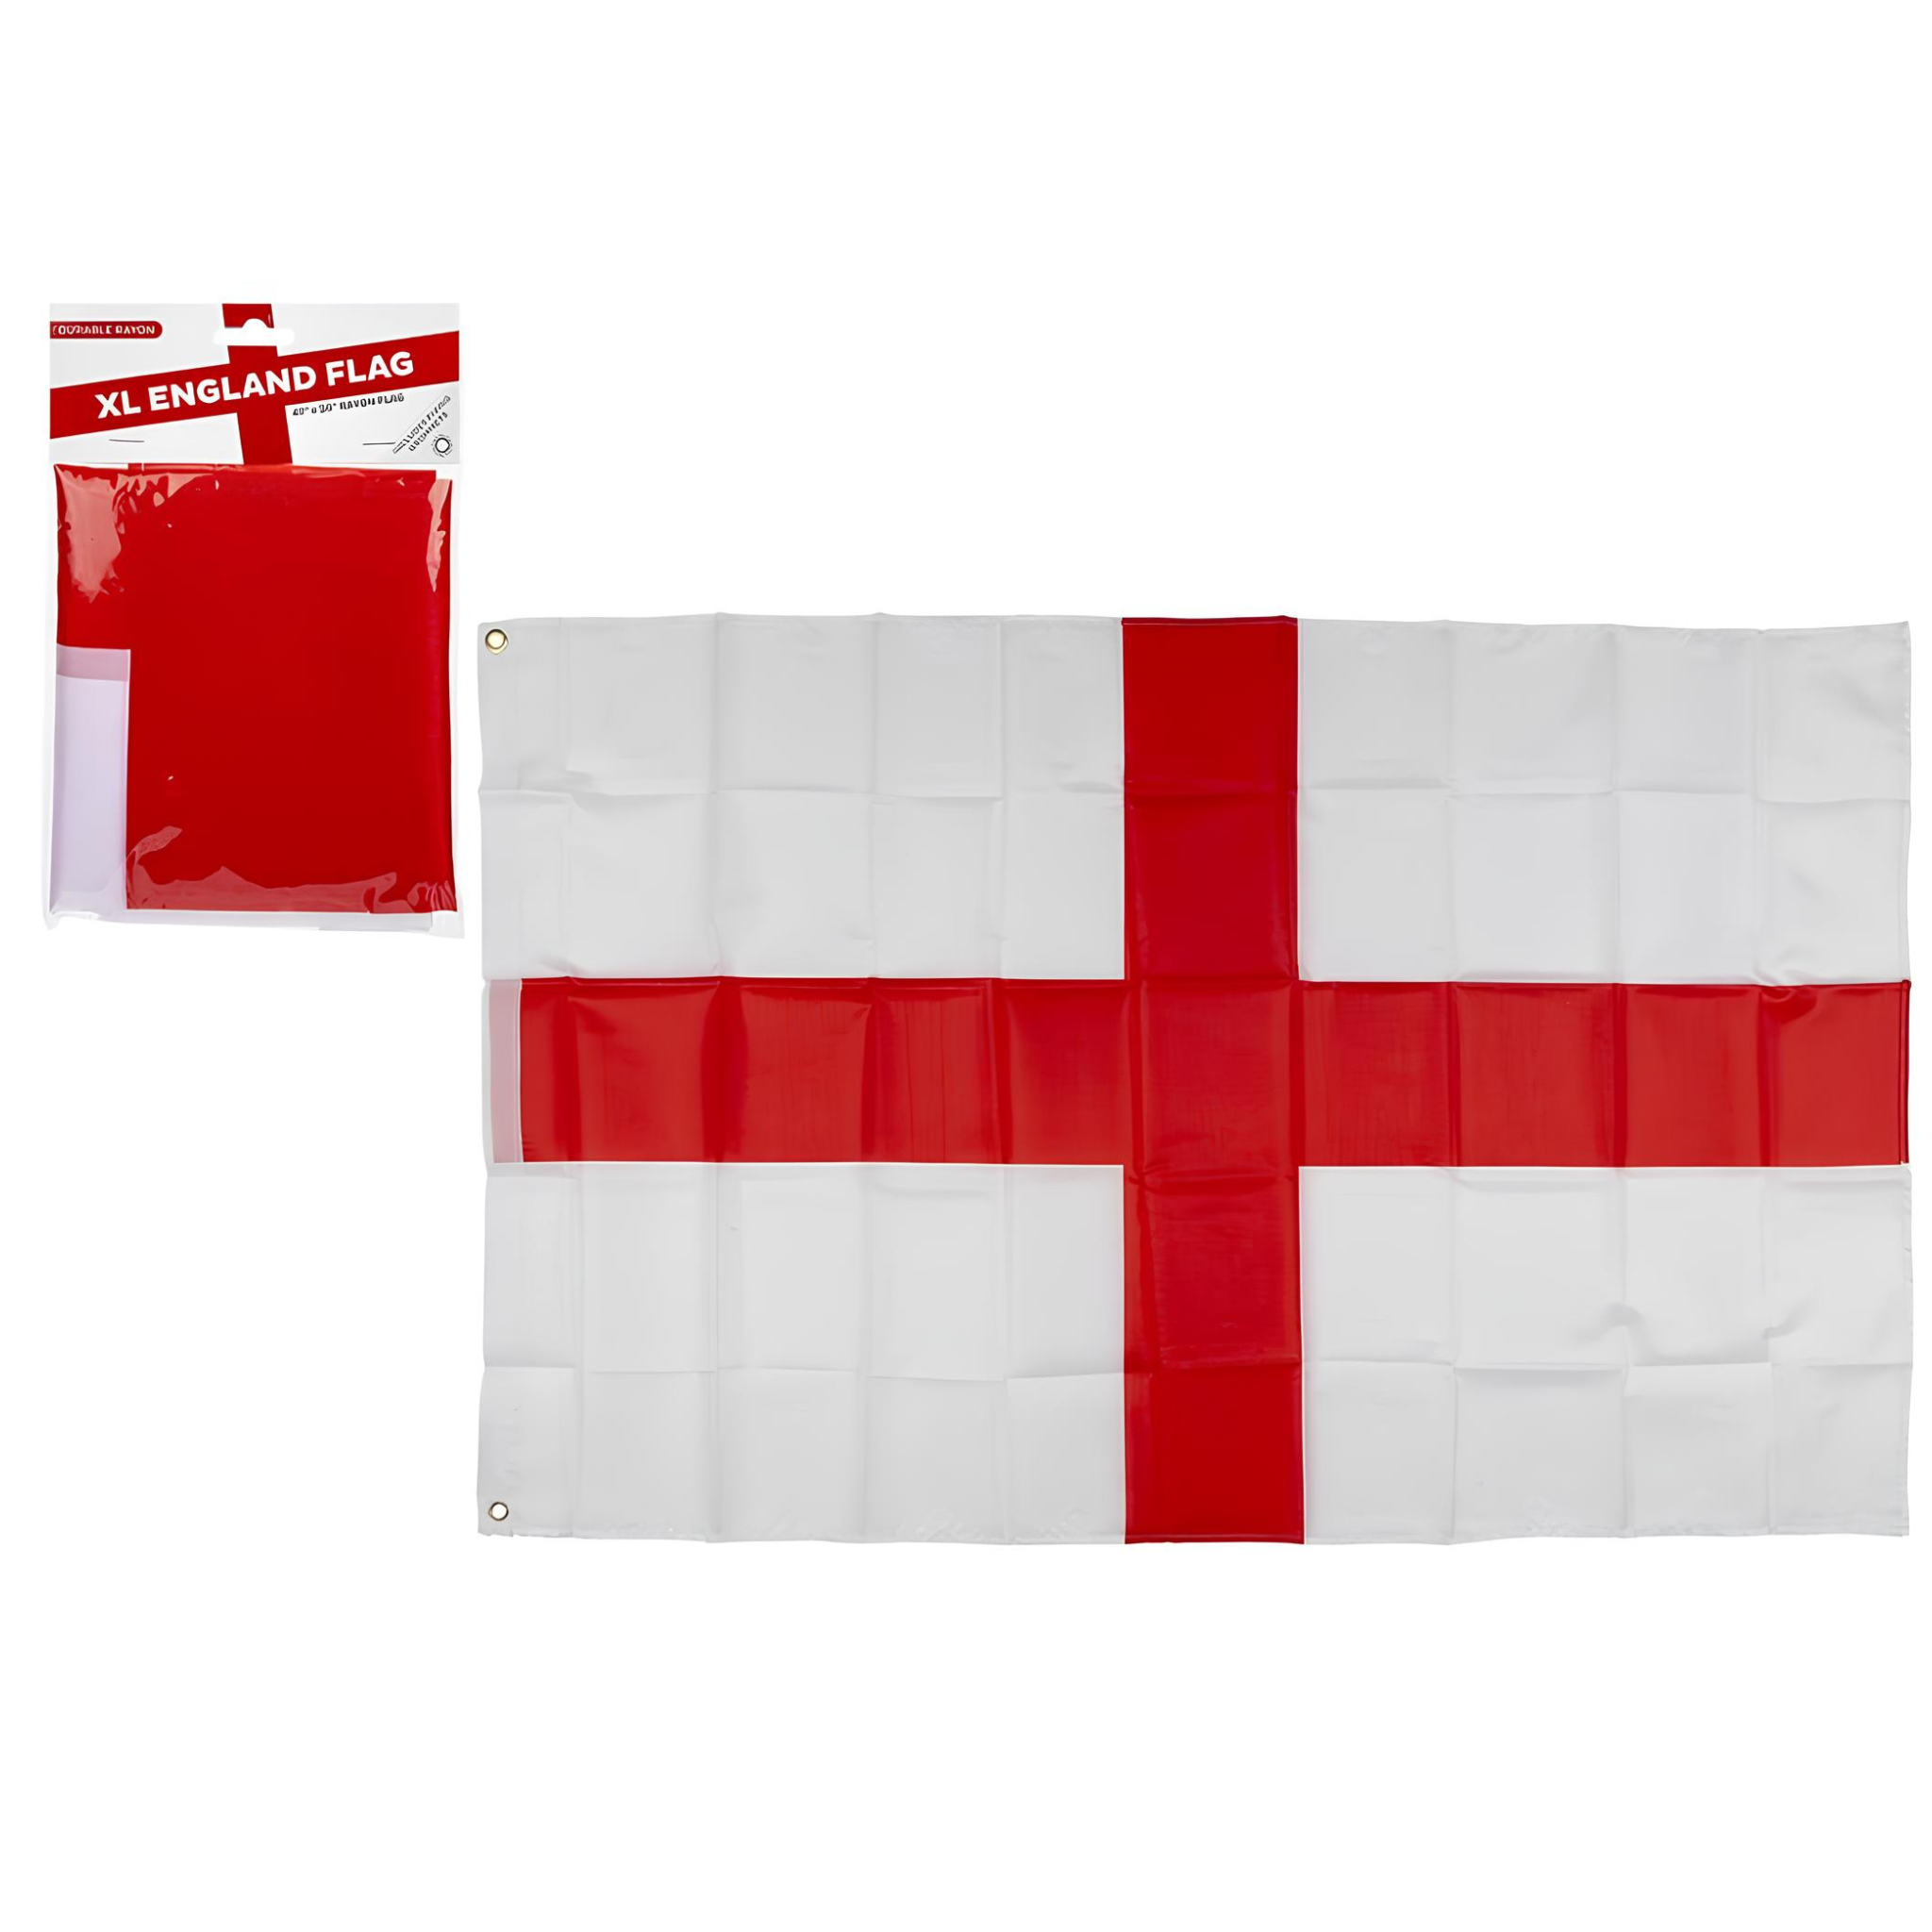 St George England Flag 76cm x 50cm